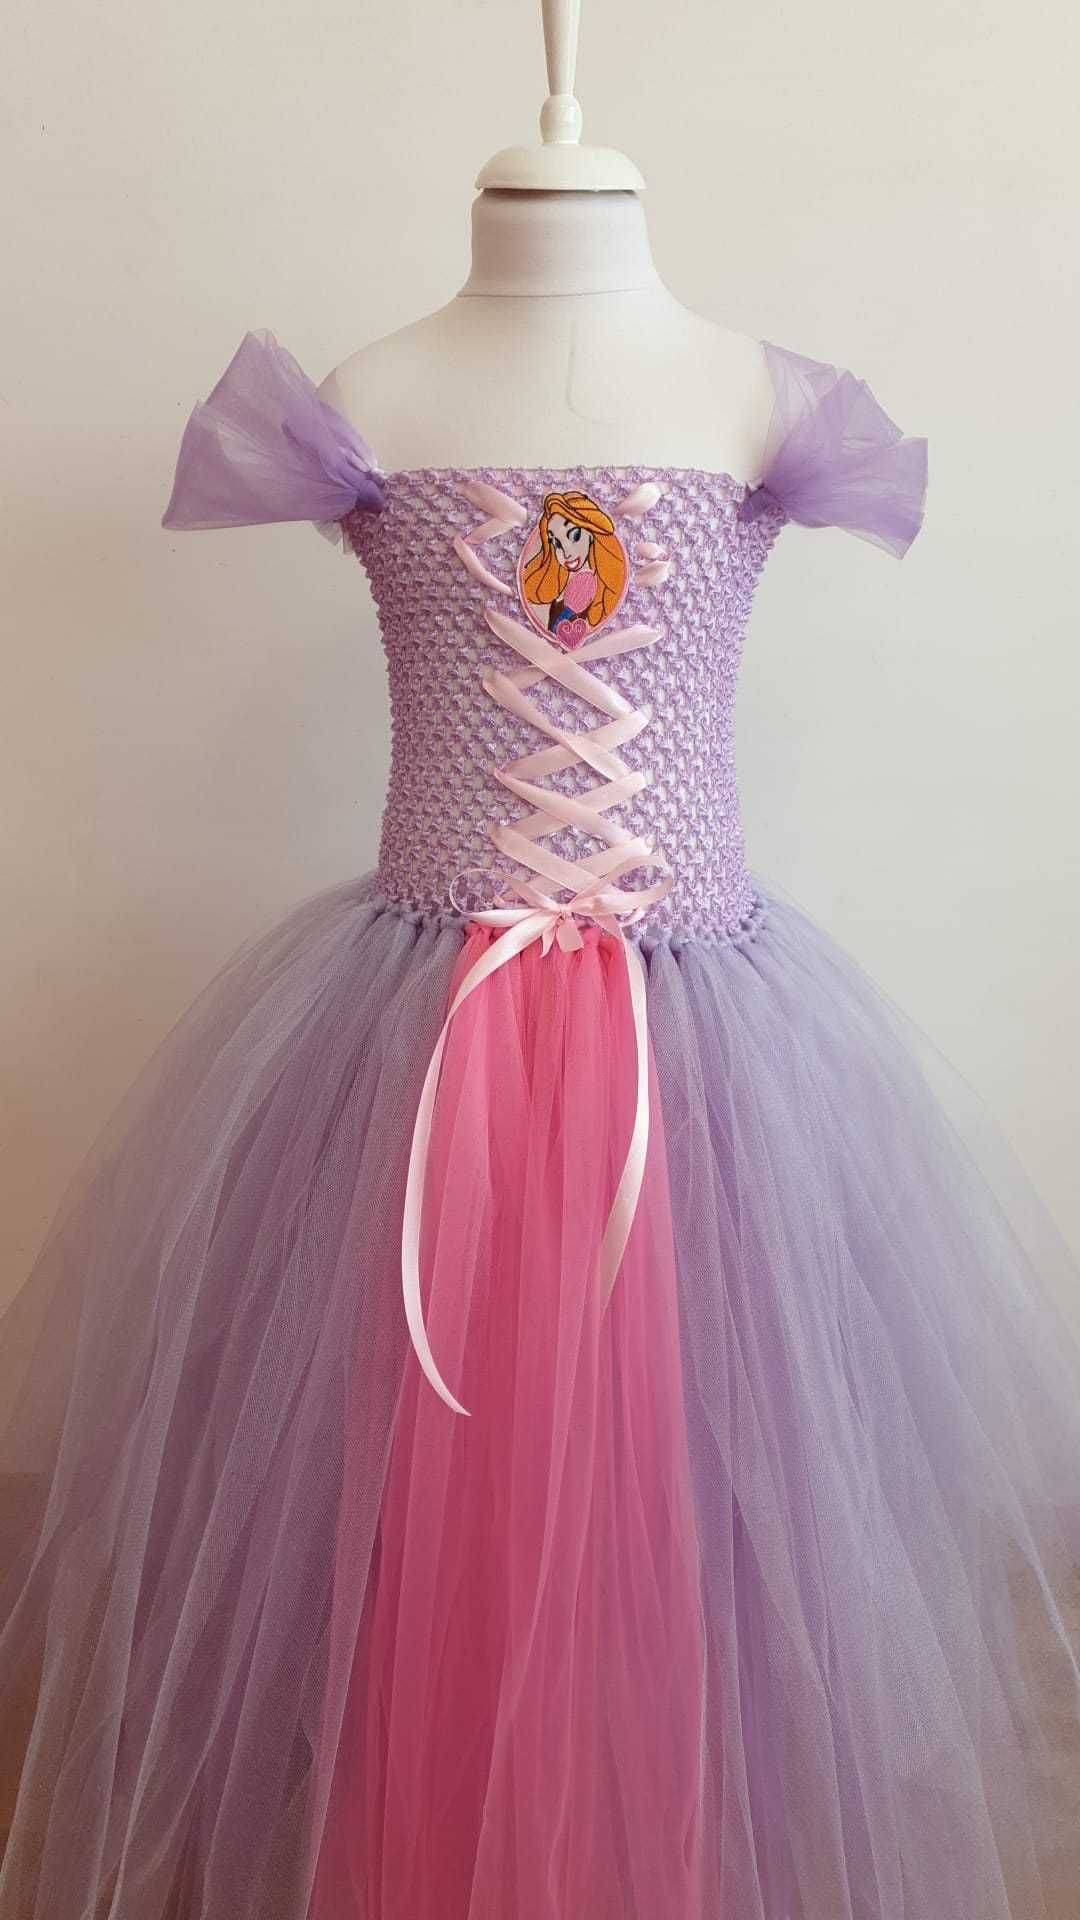 Rochita TUTU Printesa Rapunzel mov serbare carnaval cadou Craciun